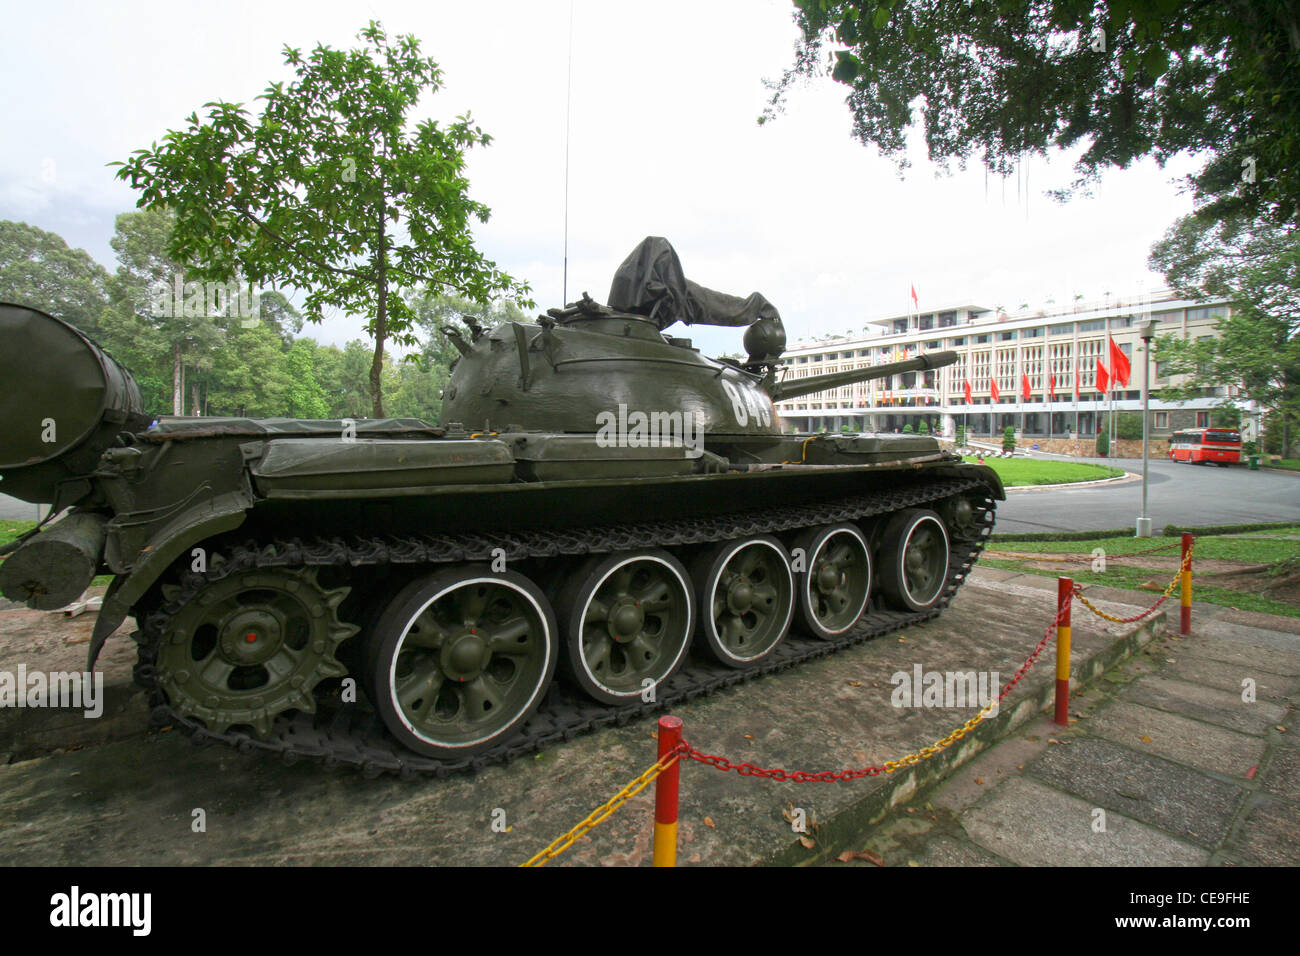 North vietnam tank saigon hi-res stock photography and images - Alamy